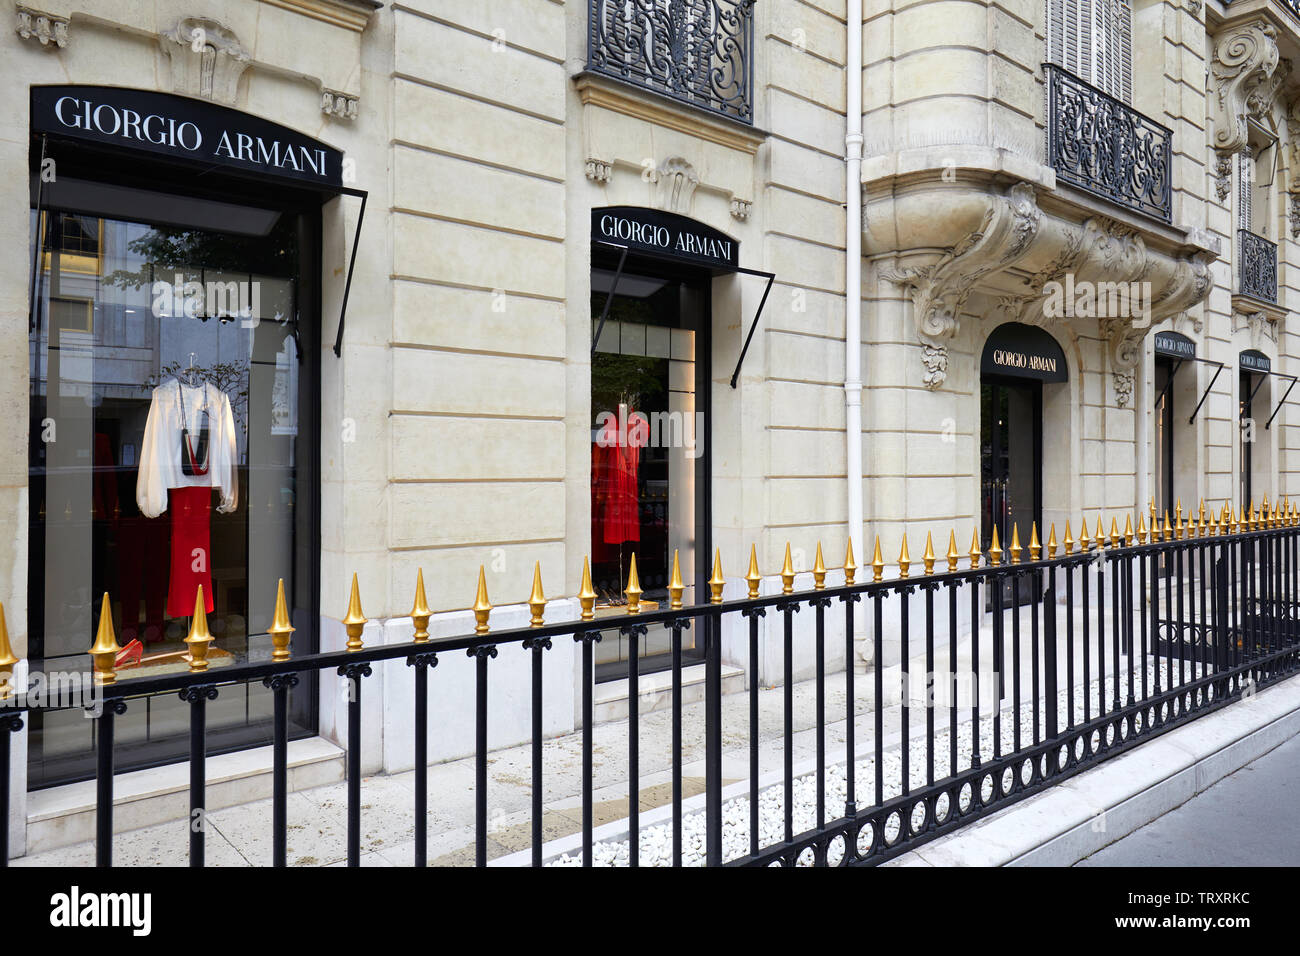 Giorgio armani shop paris france hi-res stock photography and images - Alamy